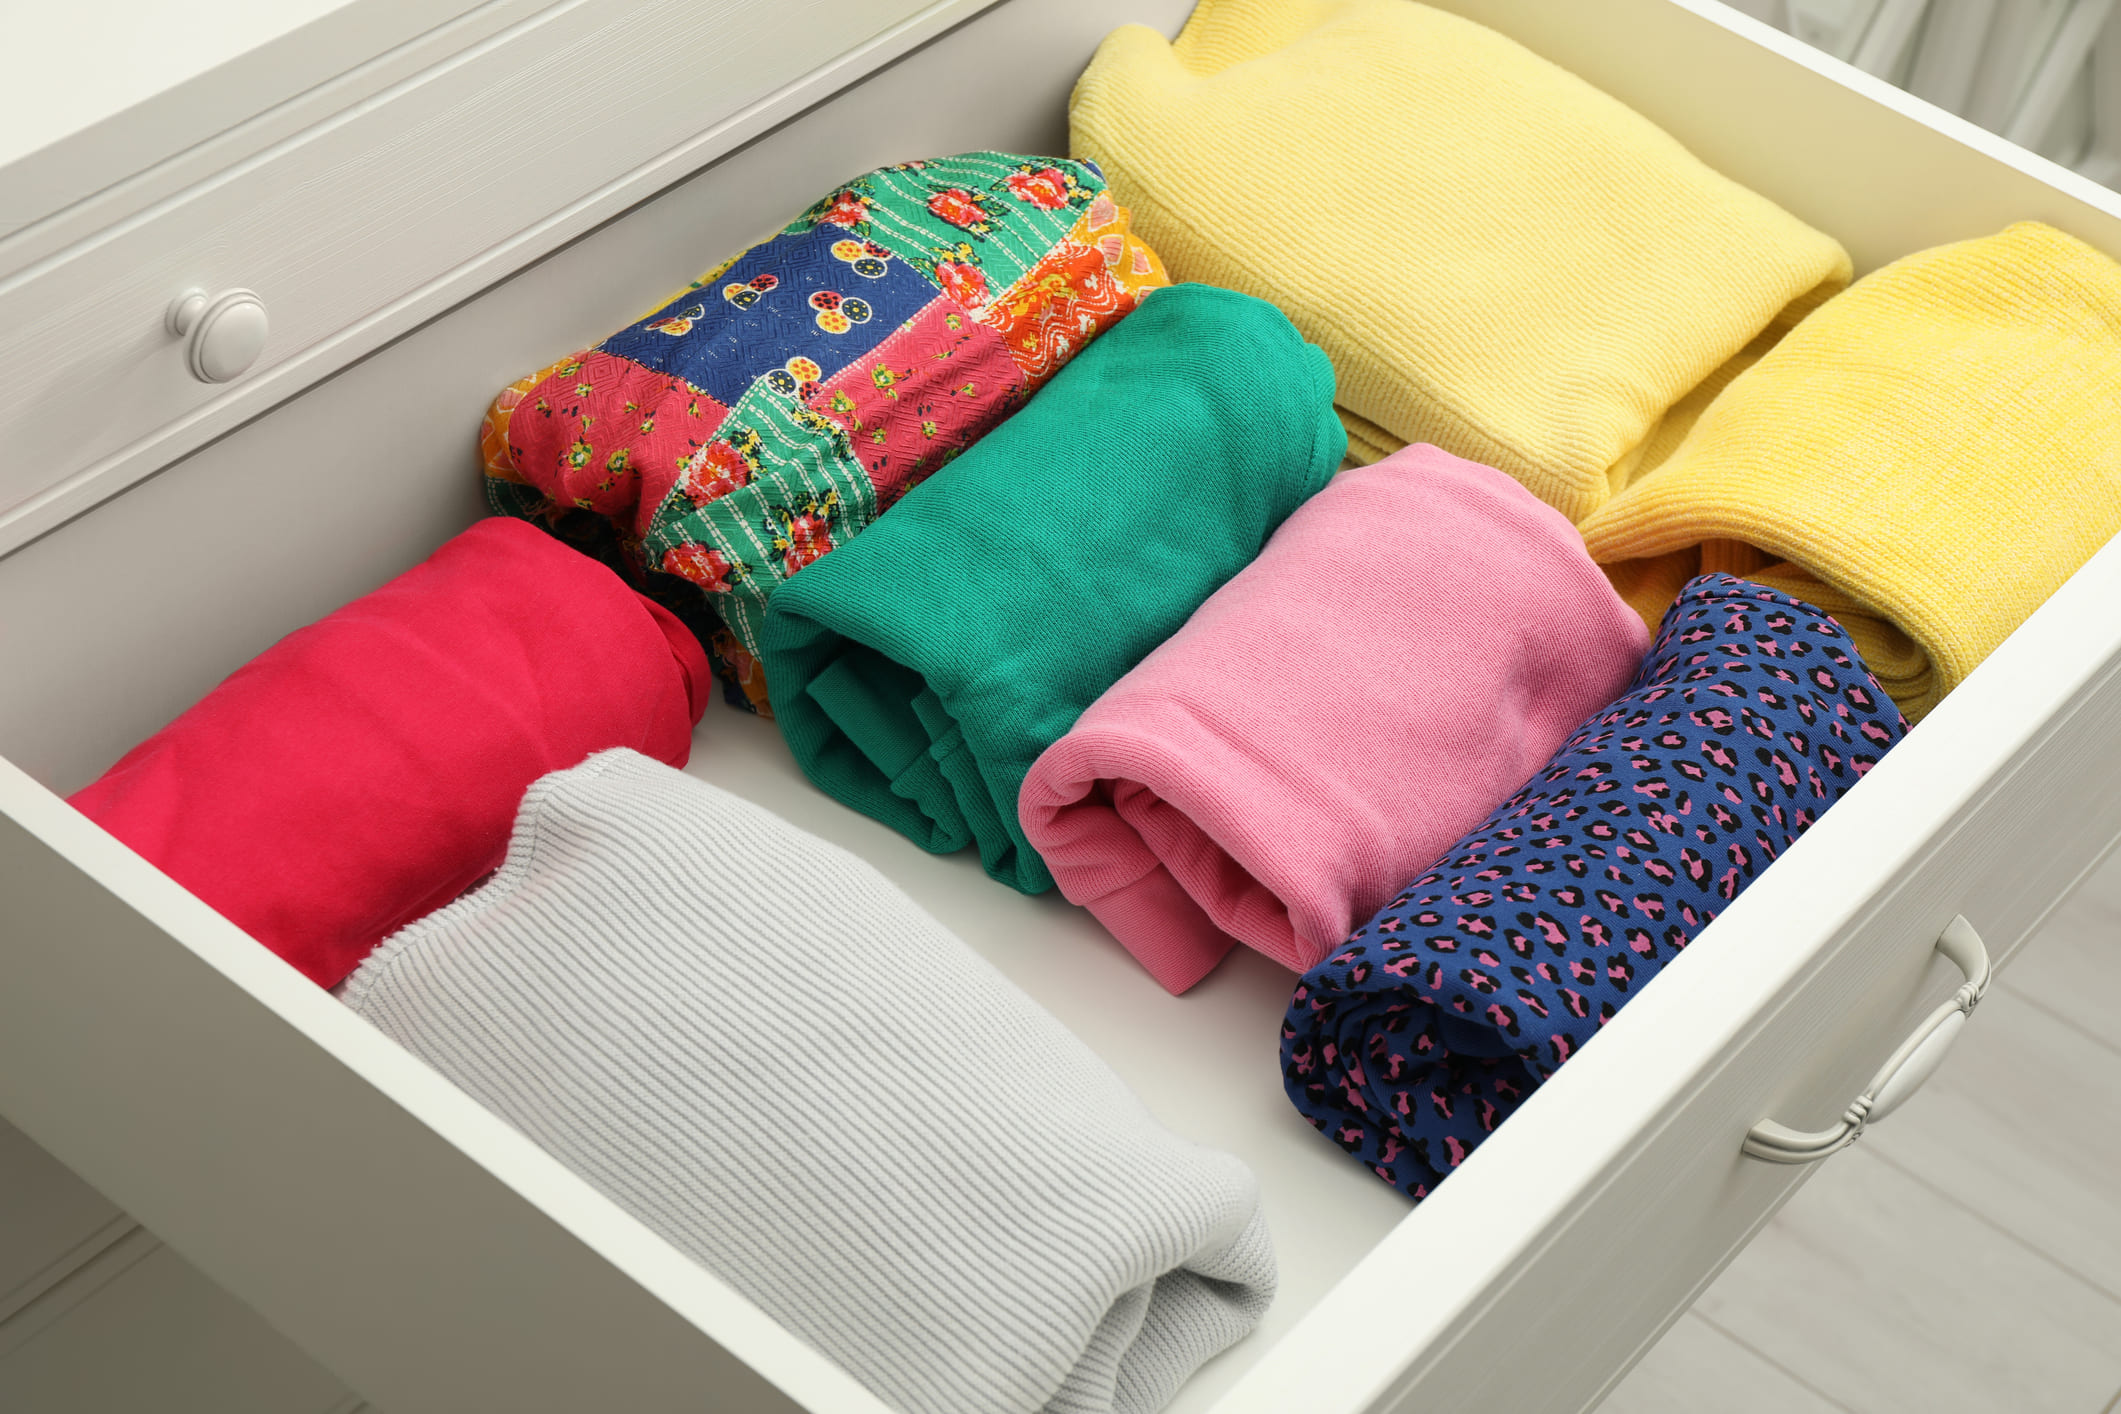 Varias prendas de ropa dobladas en un cajón.